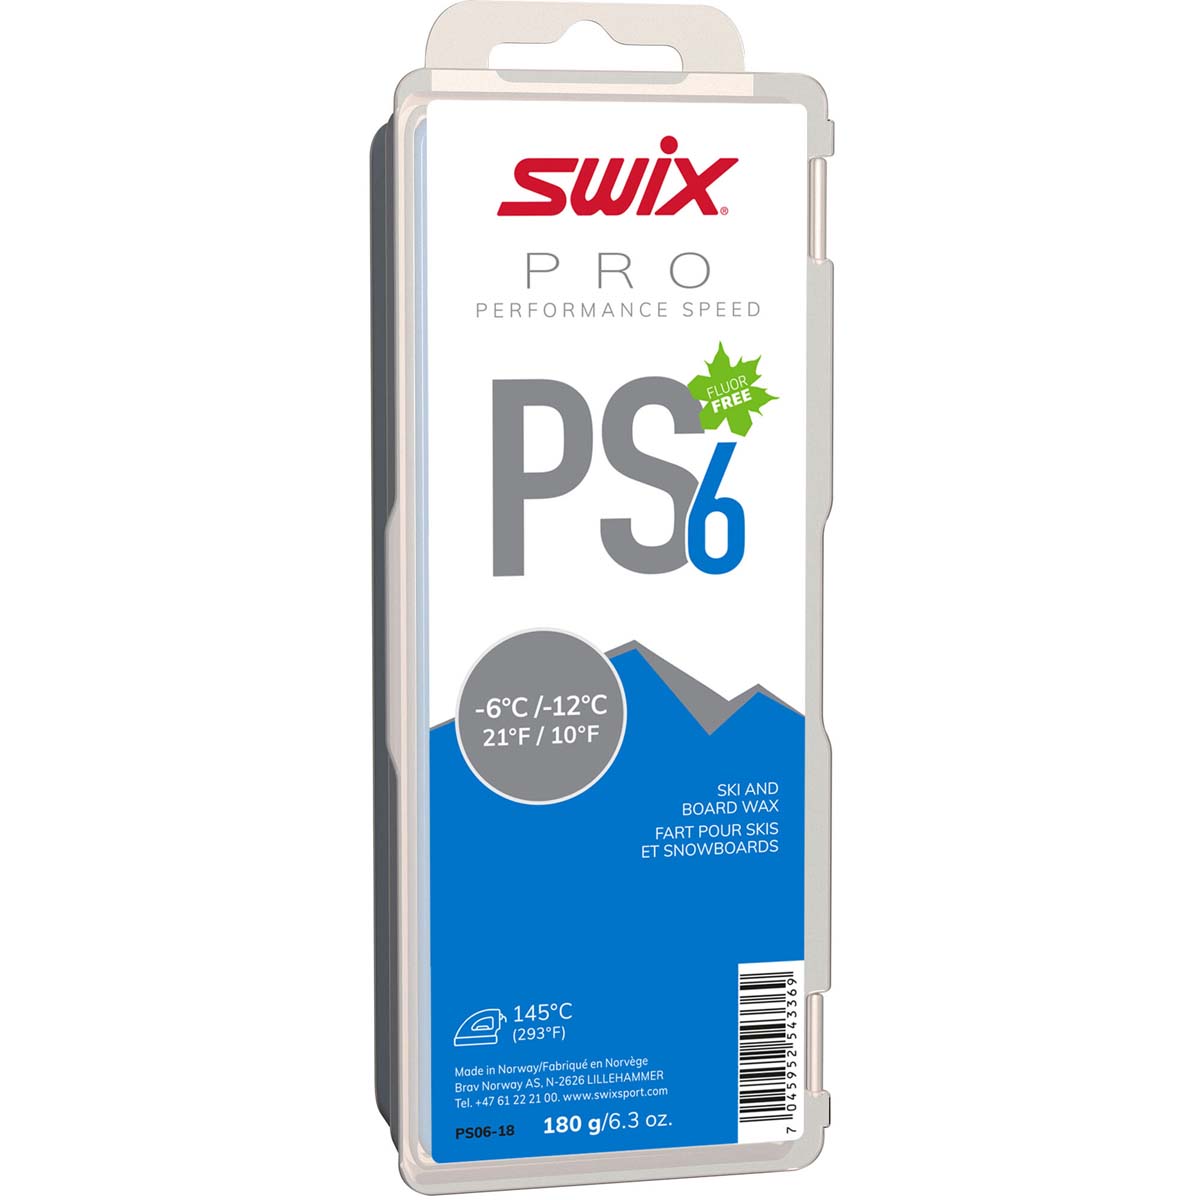 Skluzný vosk Swix Performance Speed, PS6 modrý, -6°C/-12°C,180g